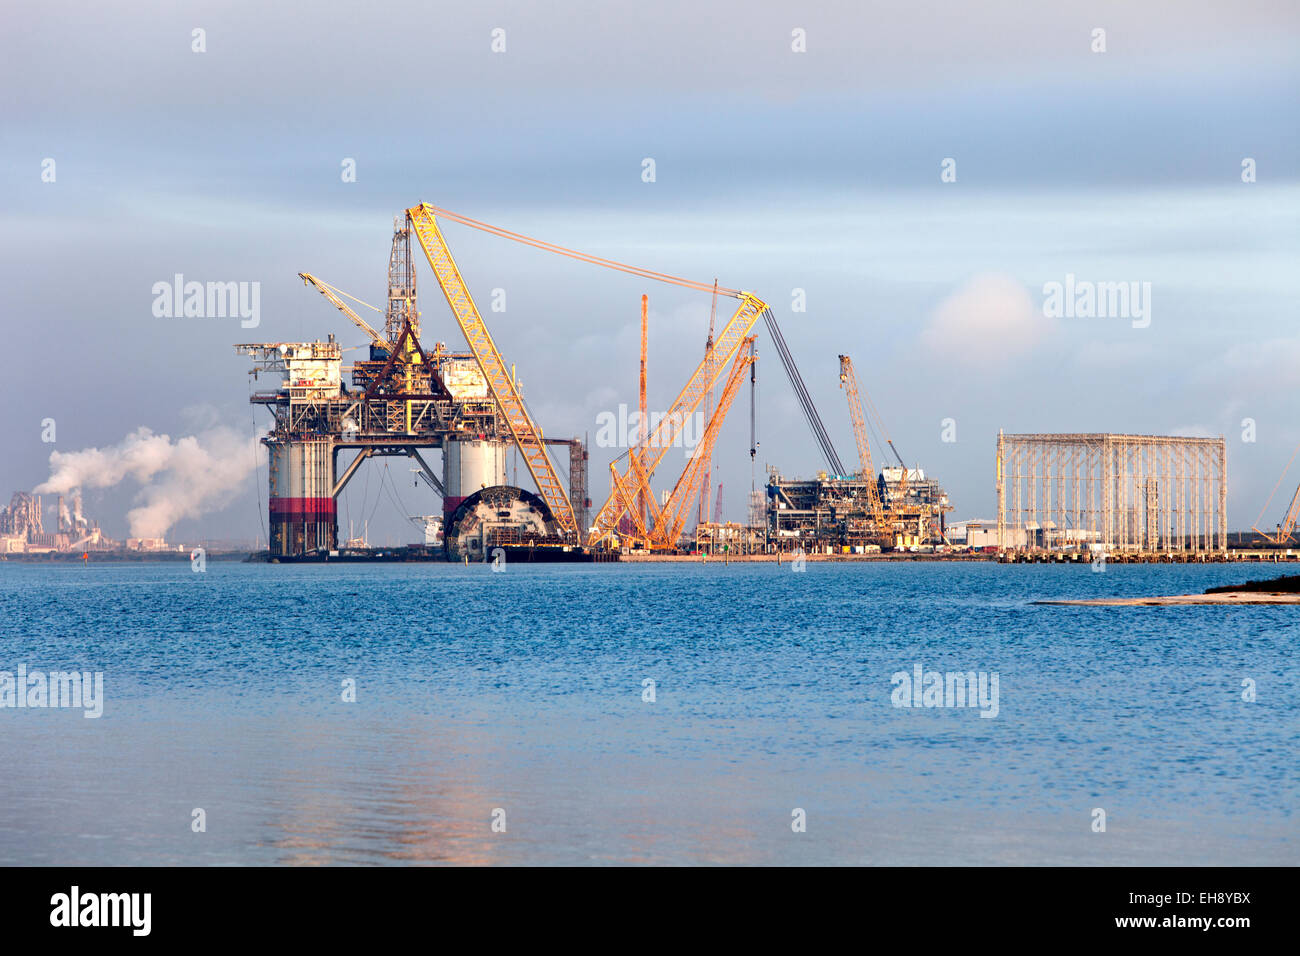 Costruzione del "Big Foot' deepwater oil & gas platform in via di completamento. Foto Stock